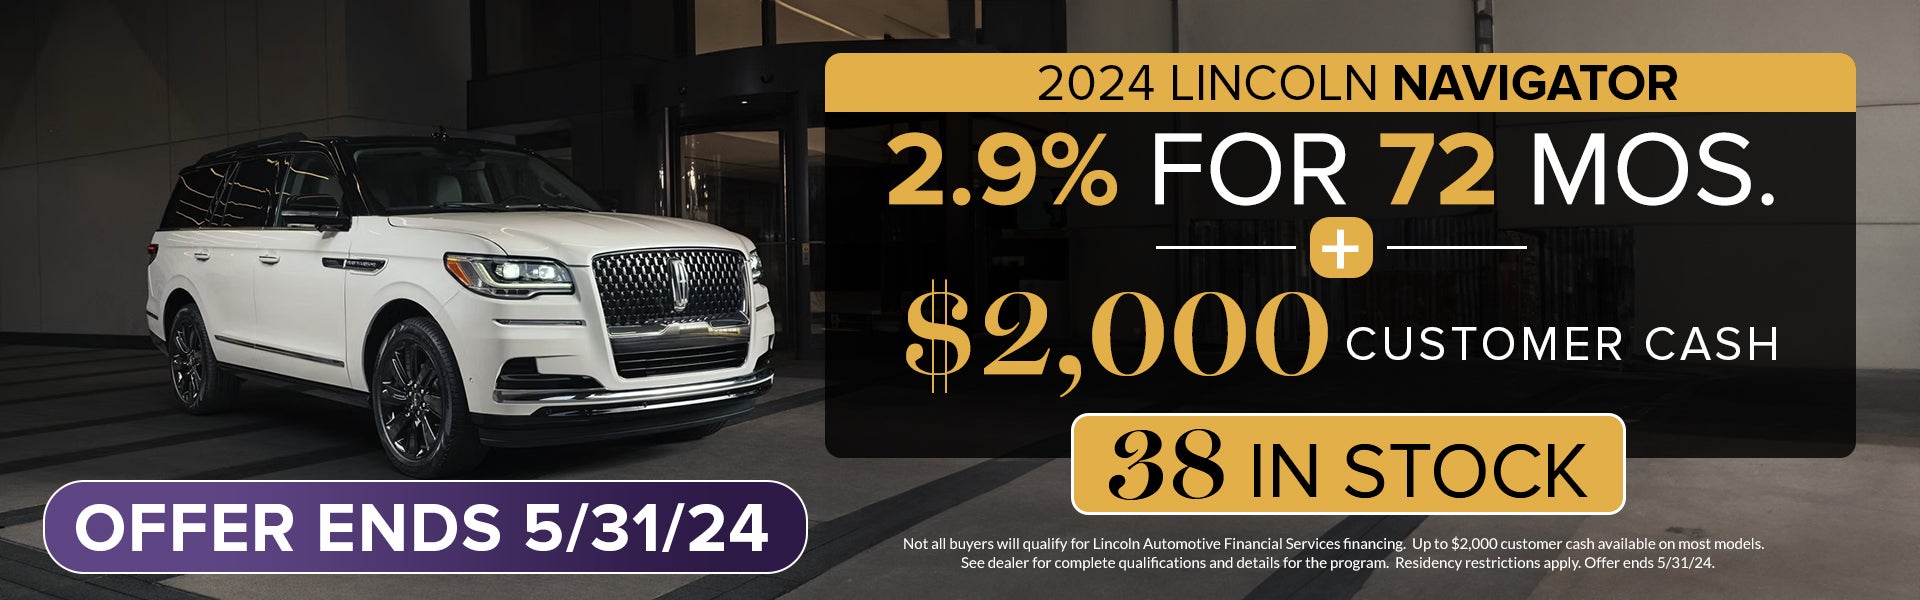 2024 Lincoln Navigator Deals